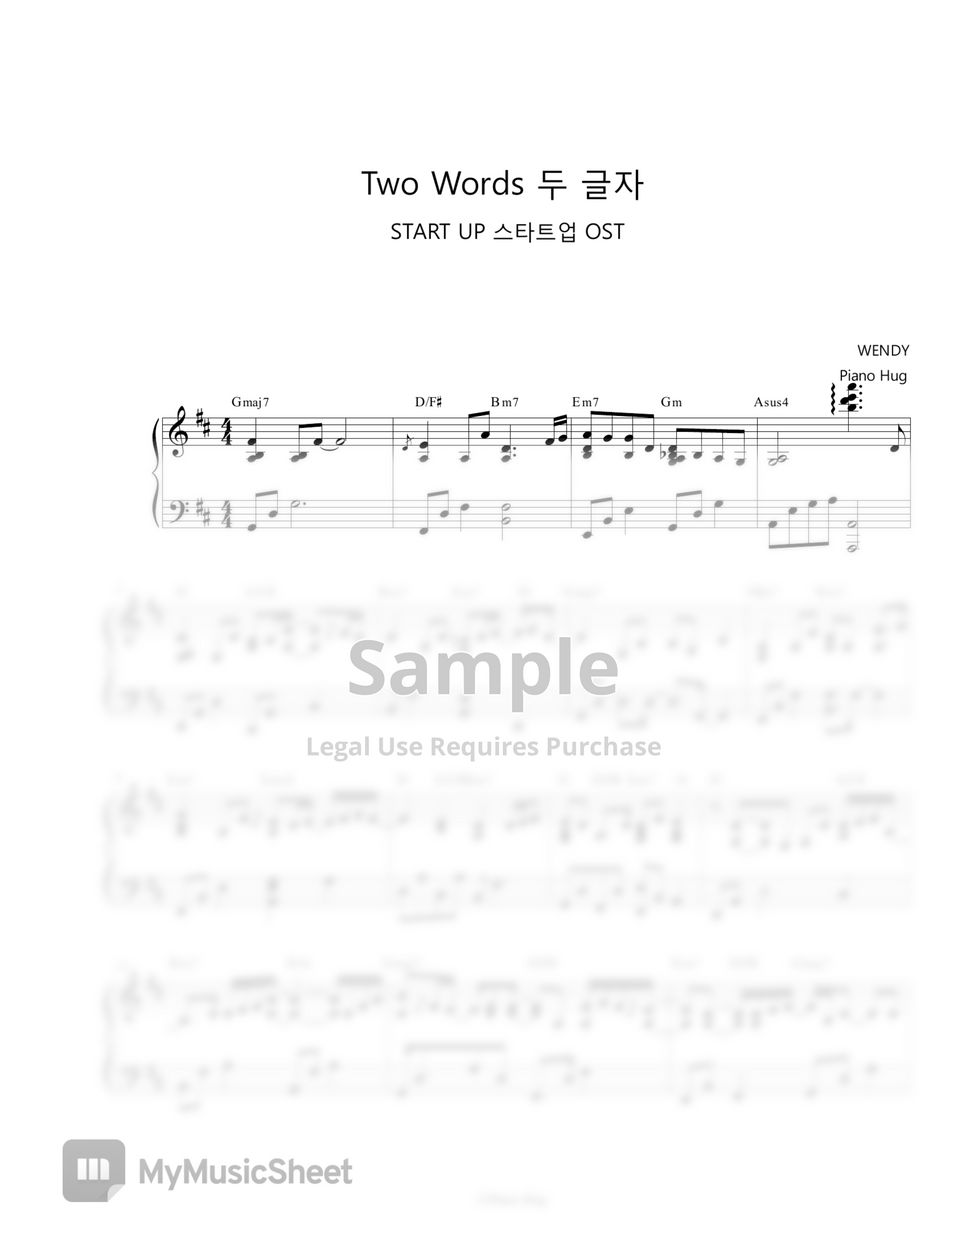 WENDY (RED VELVET) - Two Words 두 글자 (START UP OST) by Piano Hug